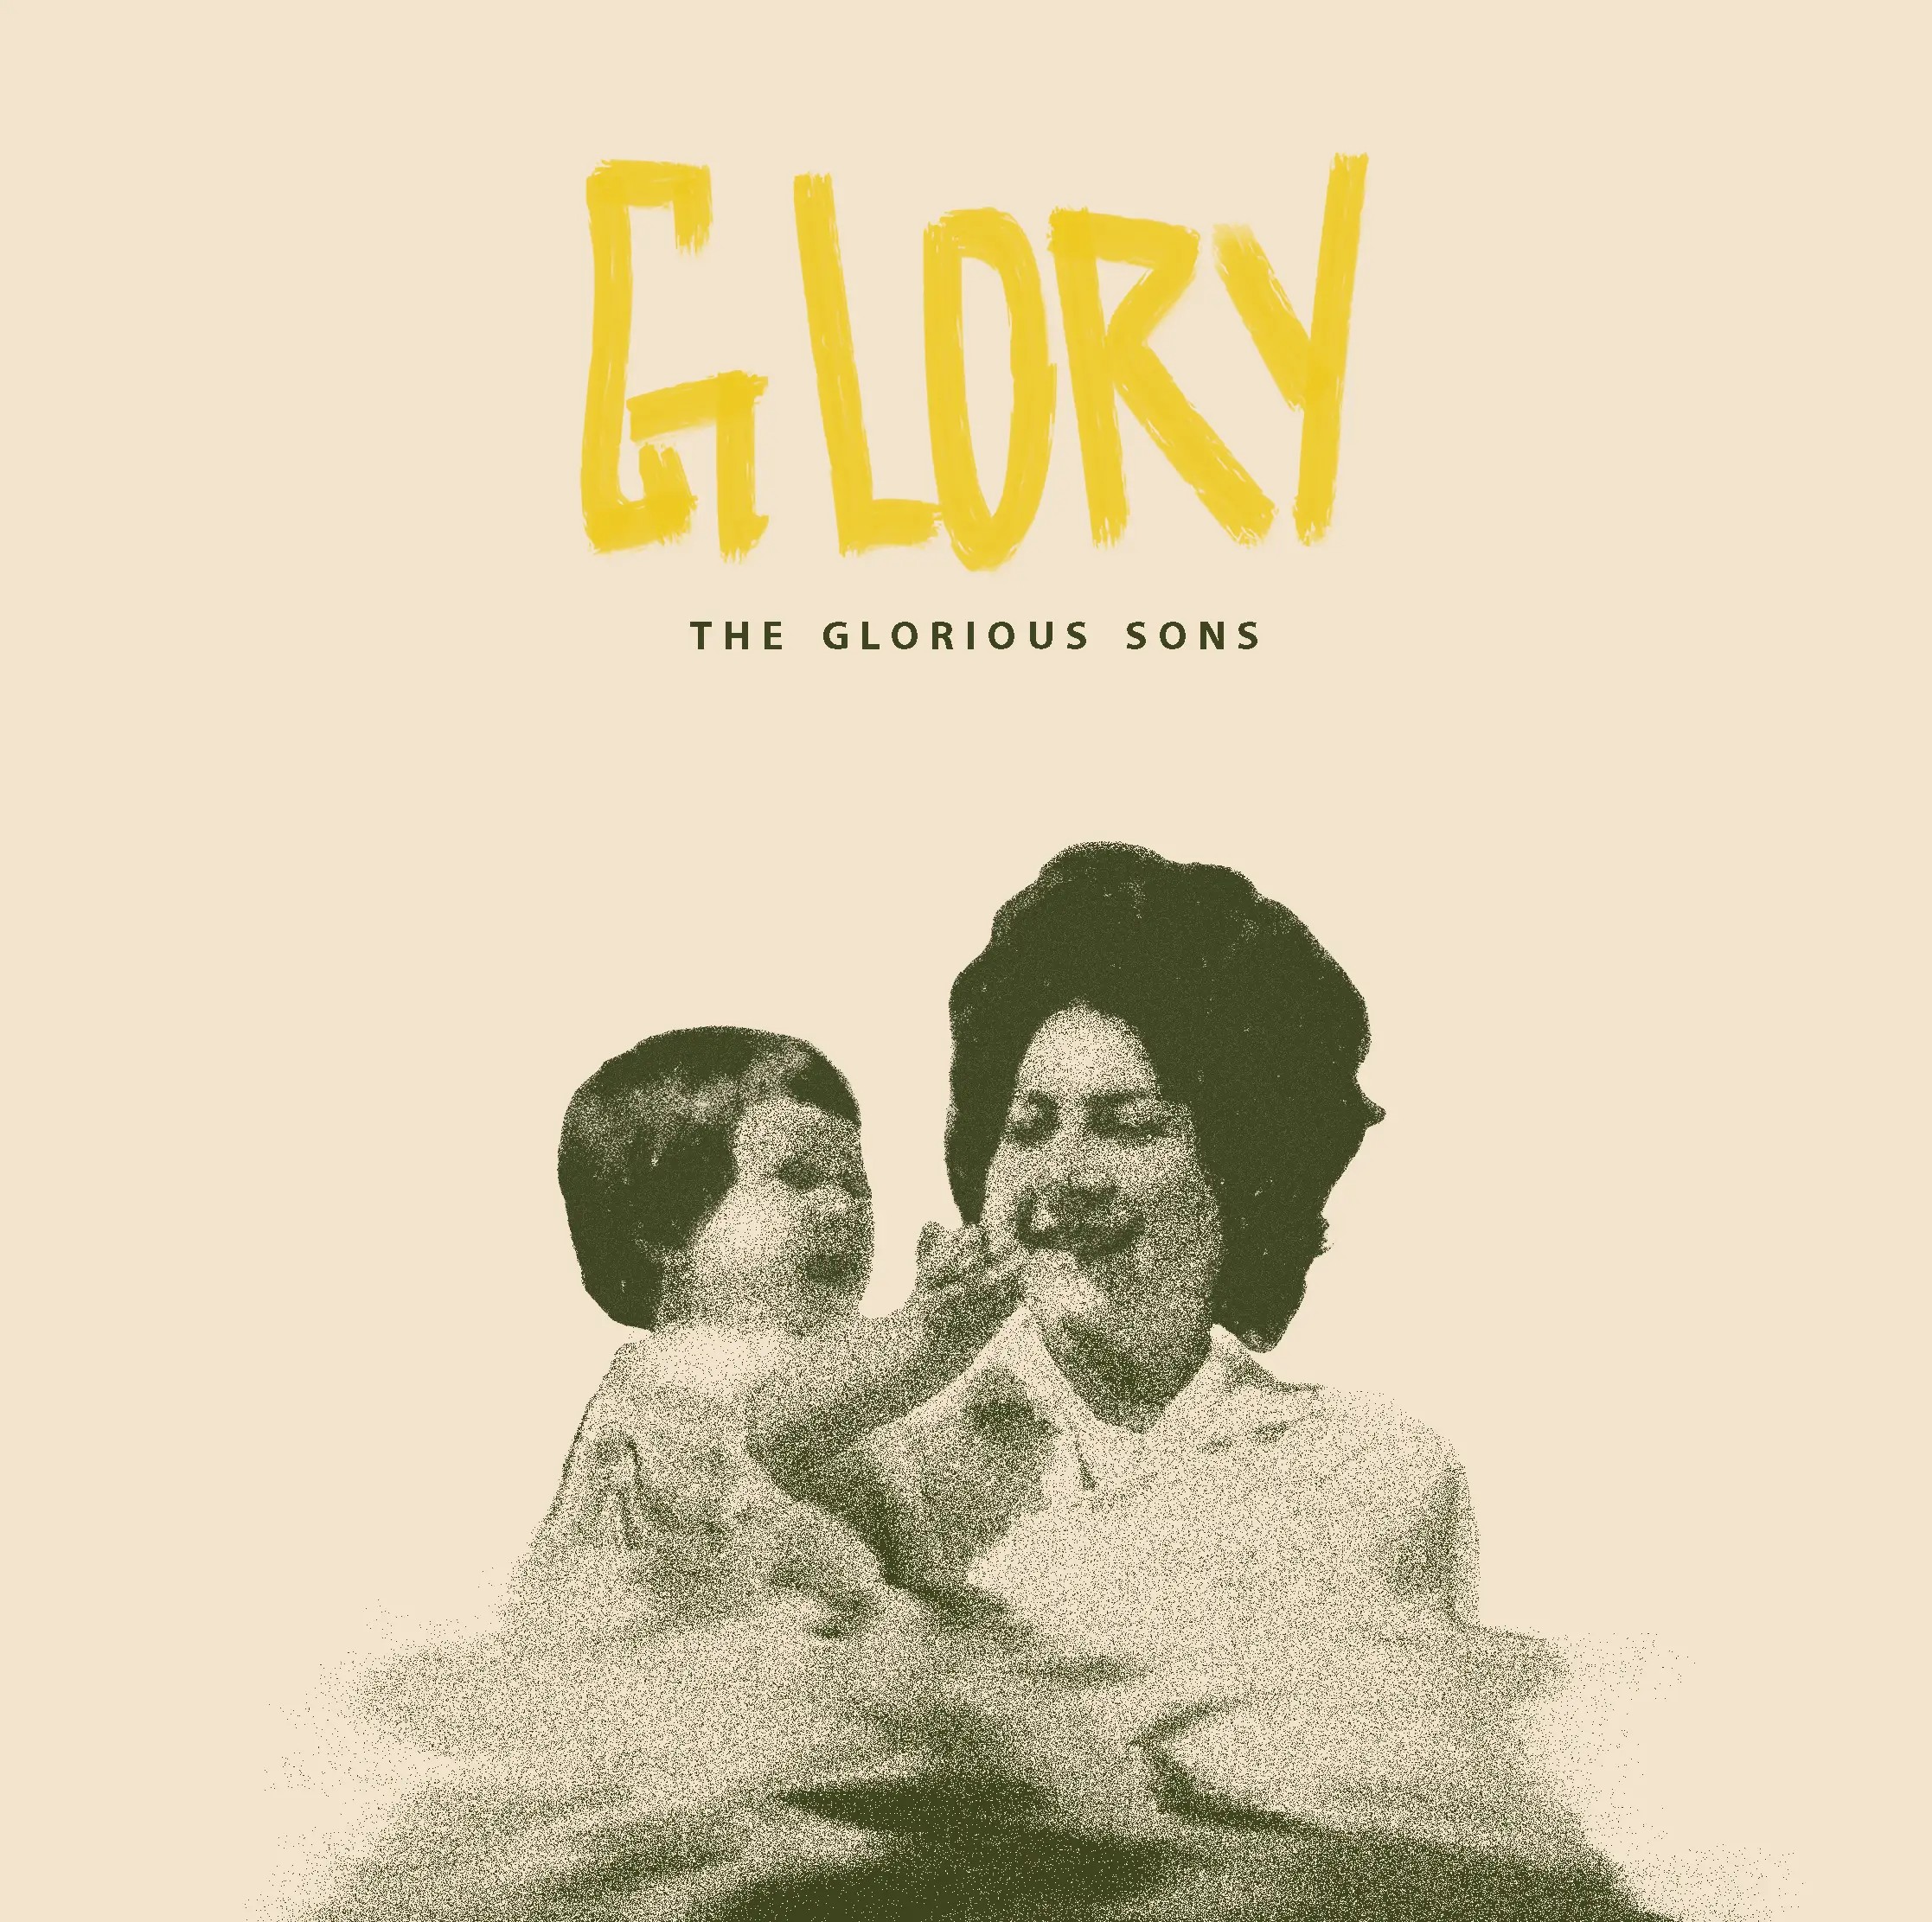 The Glorious Sons ‘Glor’ album artwork